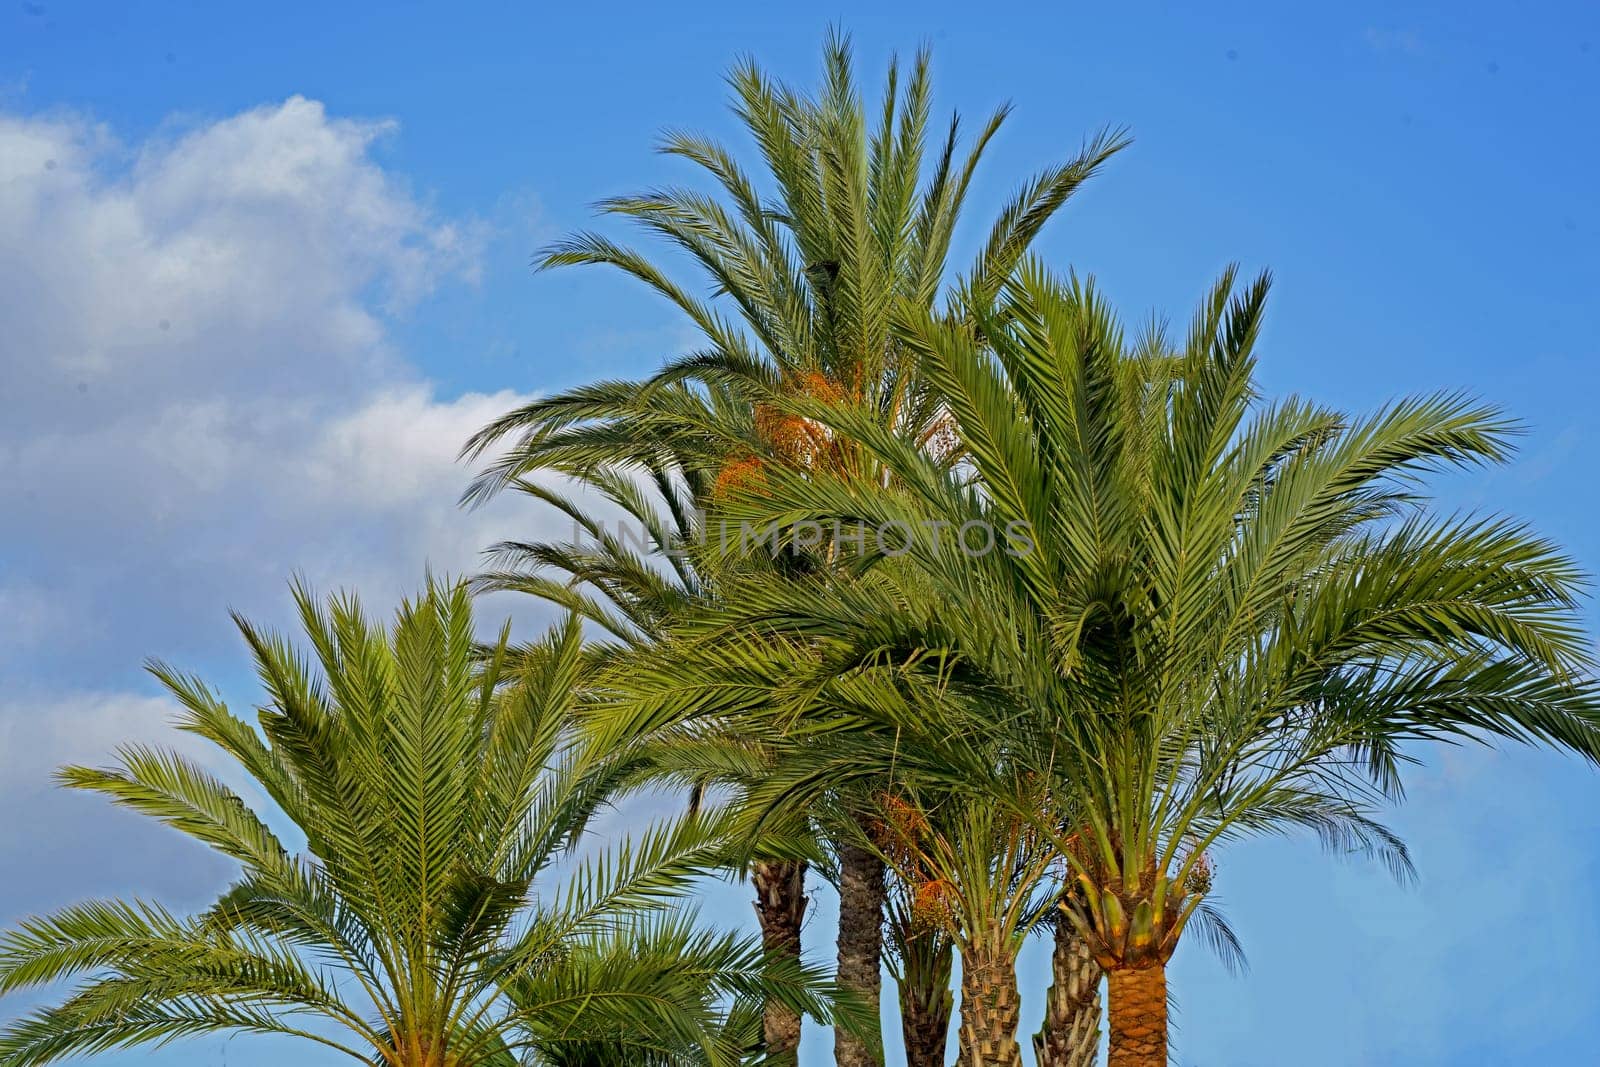 date palms against the blue sky. Summer seascape